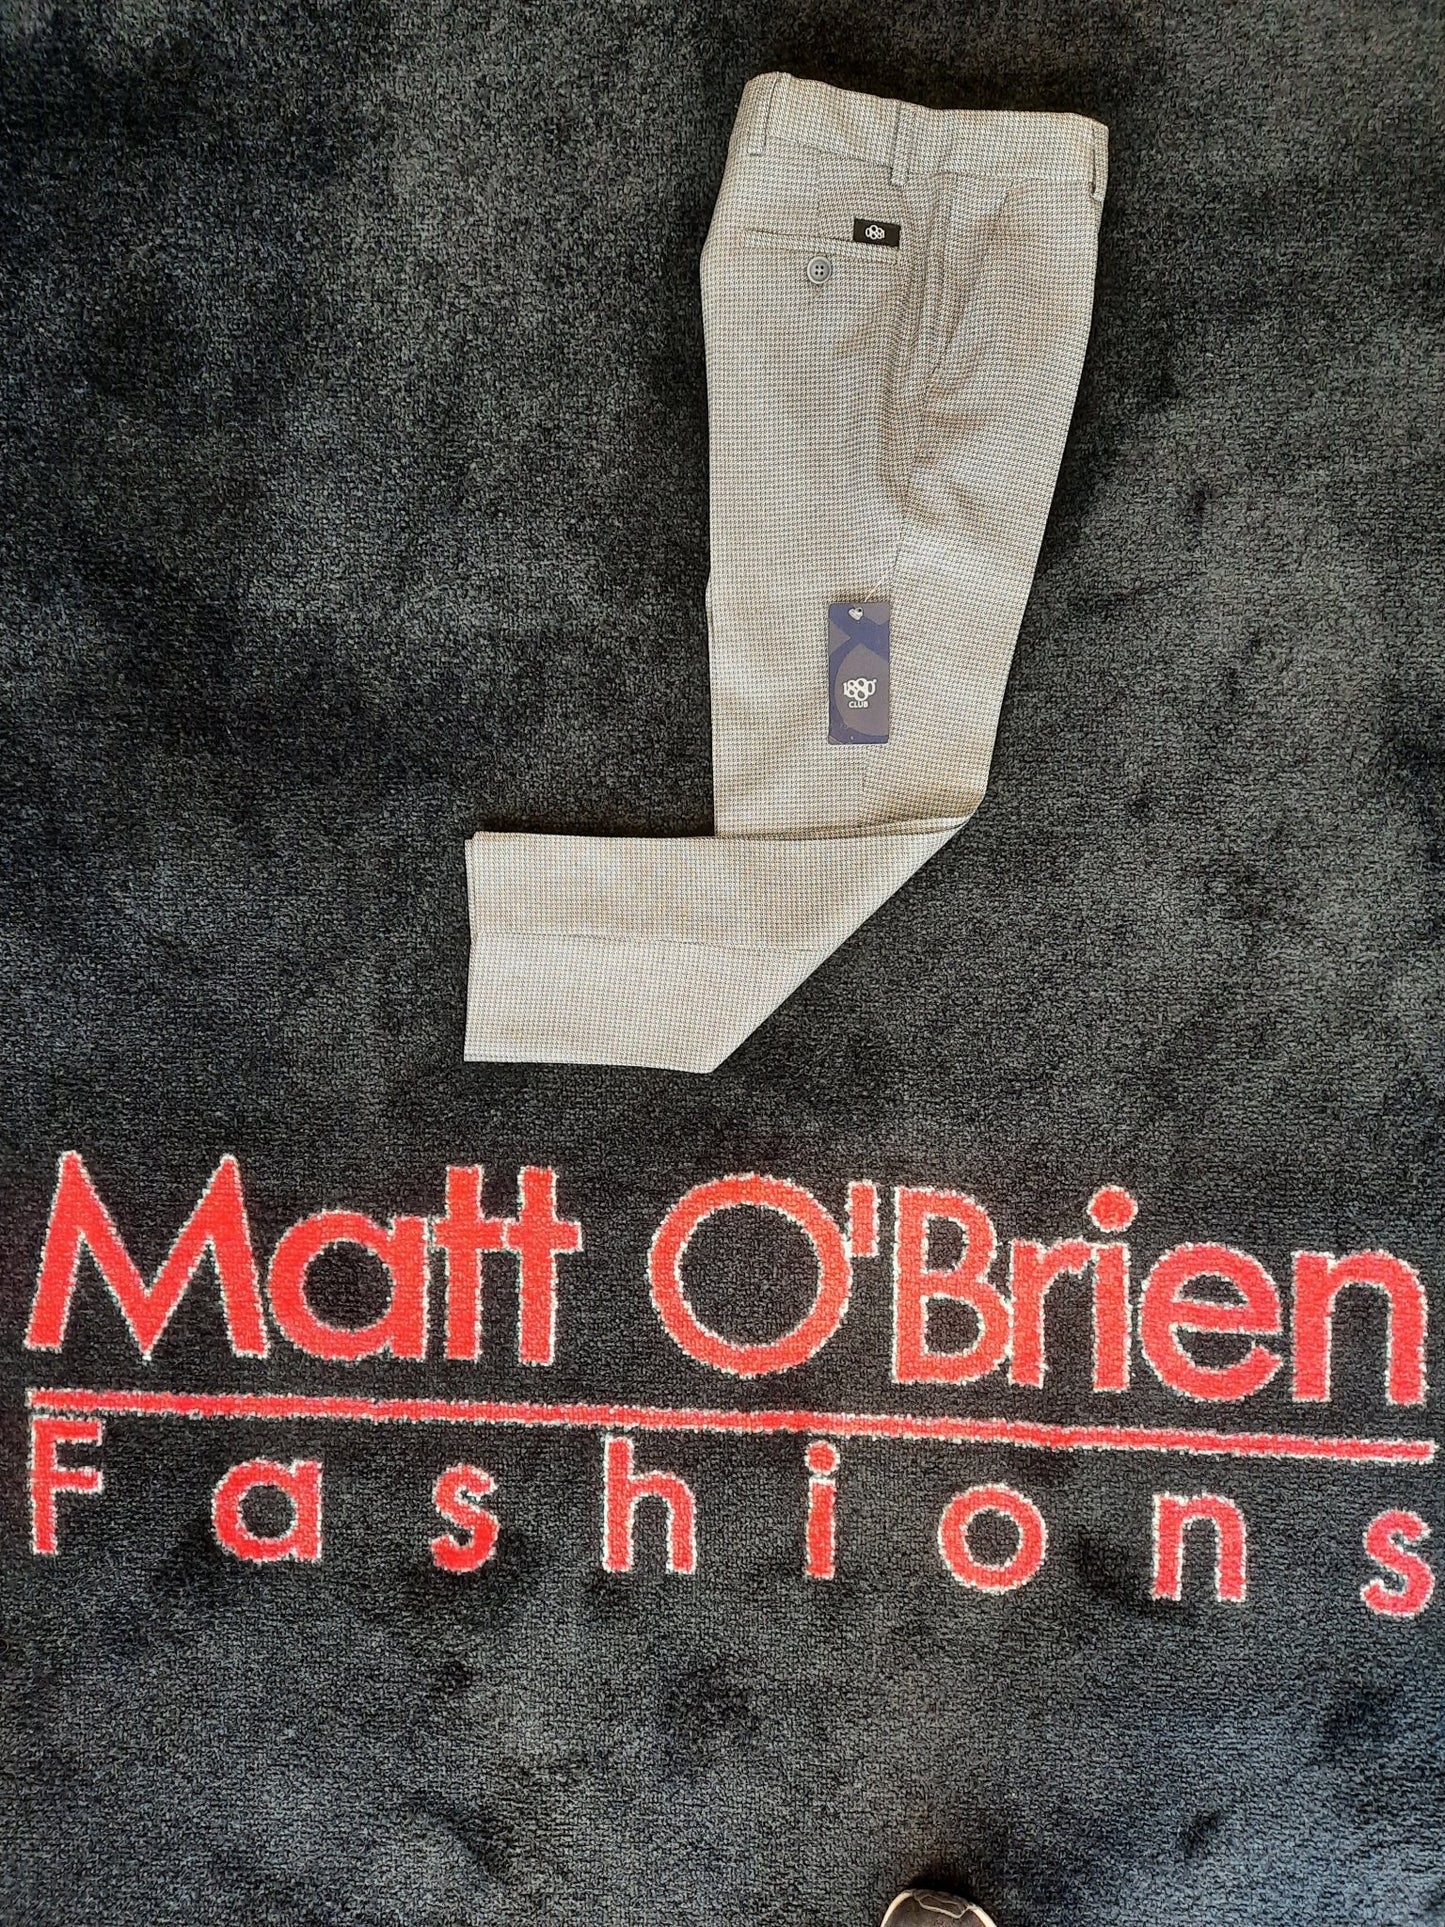 1880 Club Boys Junior Trousers - Greg 75192 - Matt O'Brien Fashions